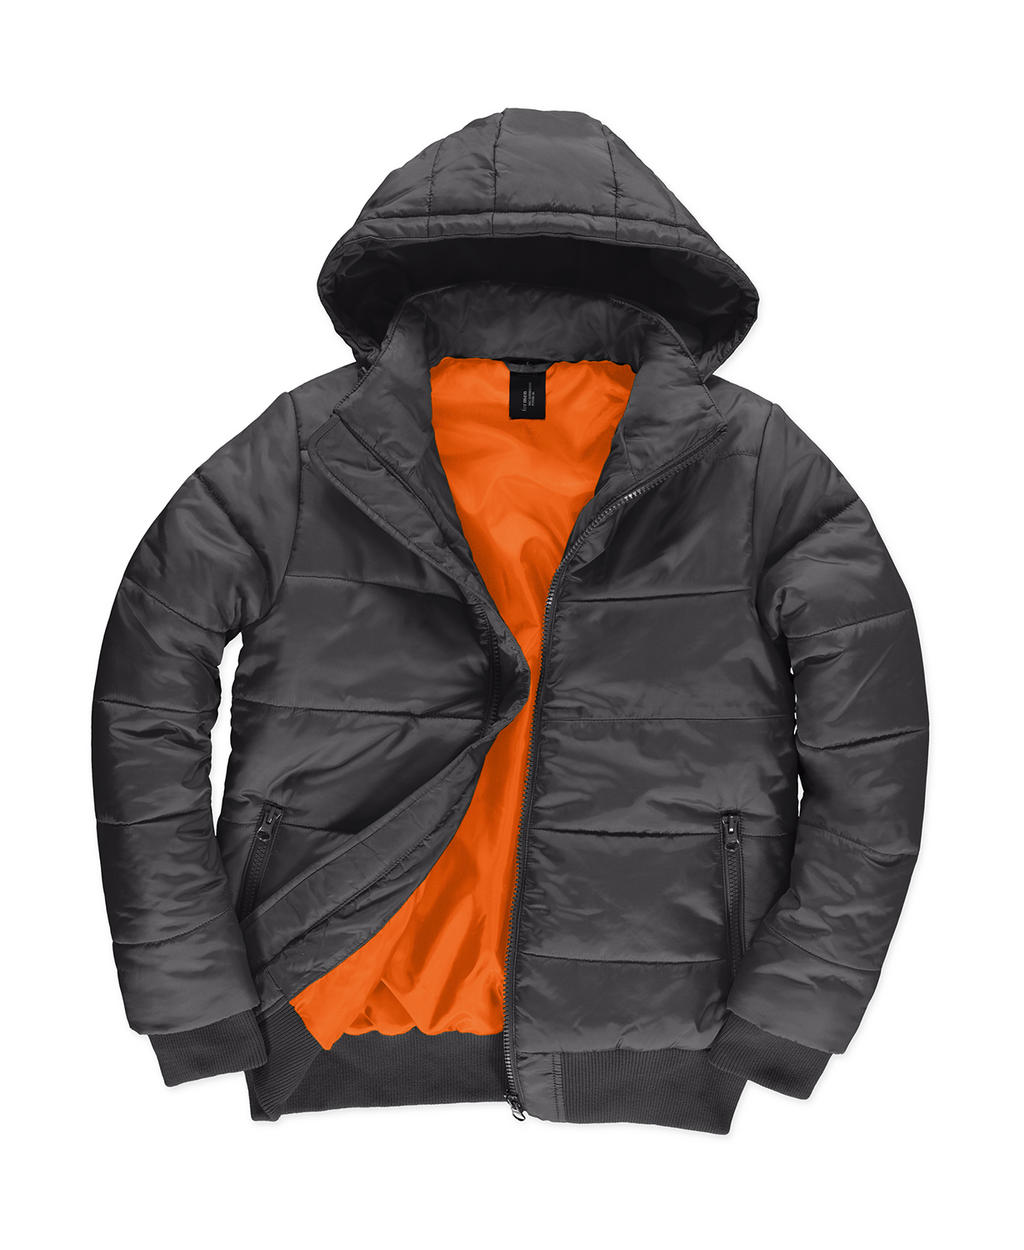  Superhood/men Jacket in Farbe Dark Grey/Neon Orange